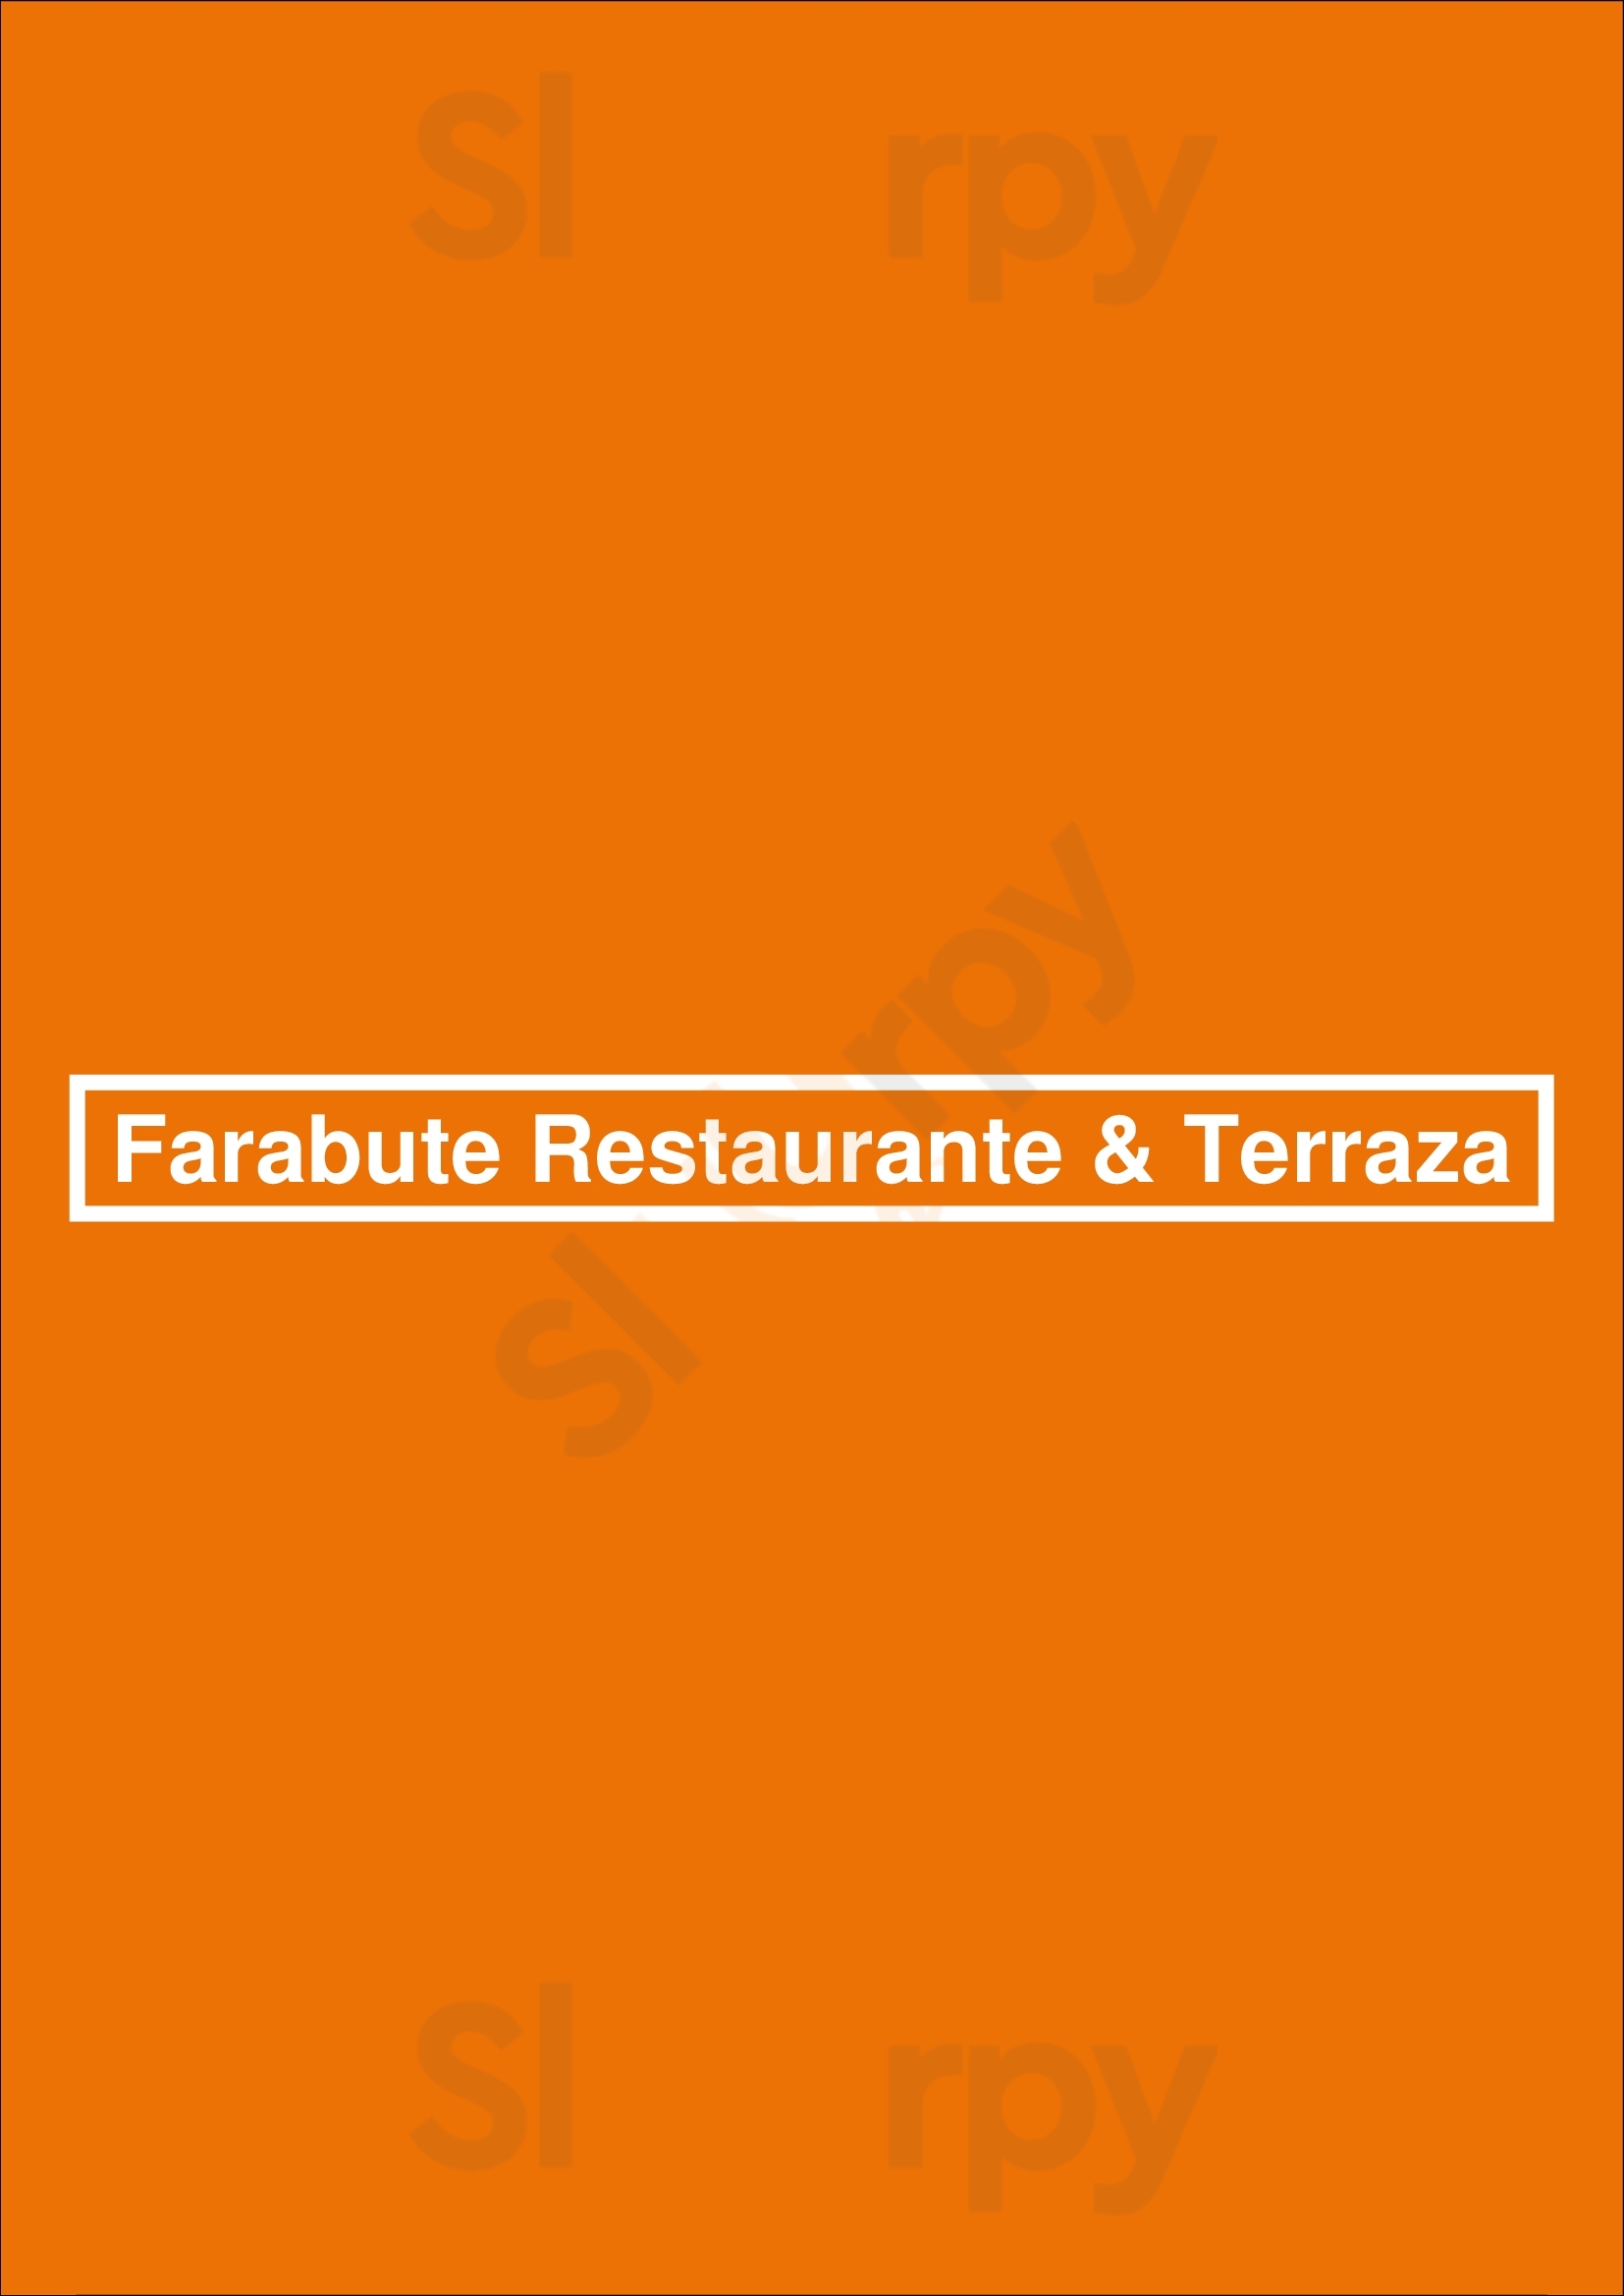 Farabute Restaurante & Terraza Buenos Aires Menu - 1